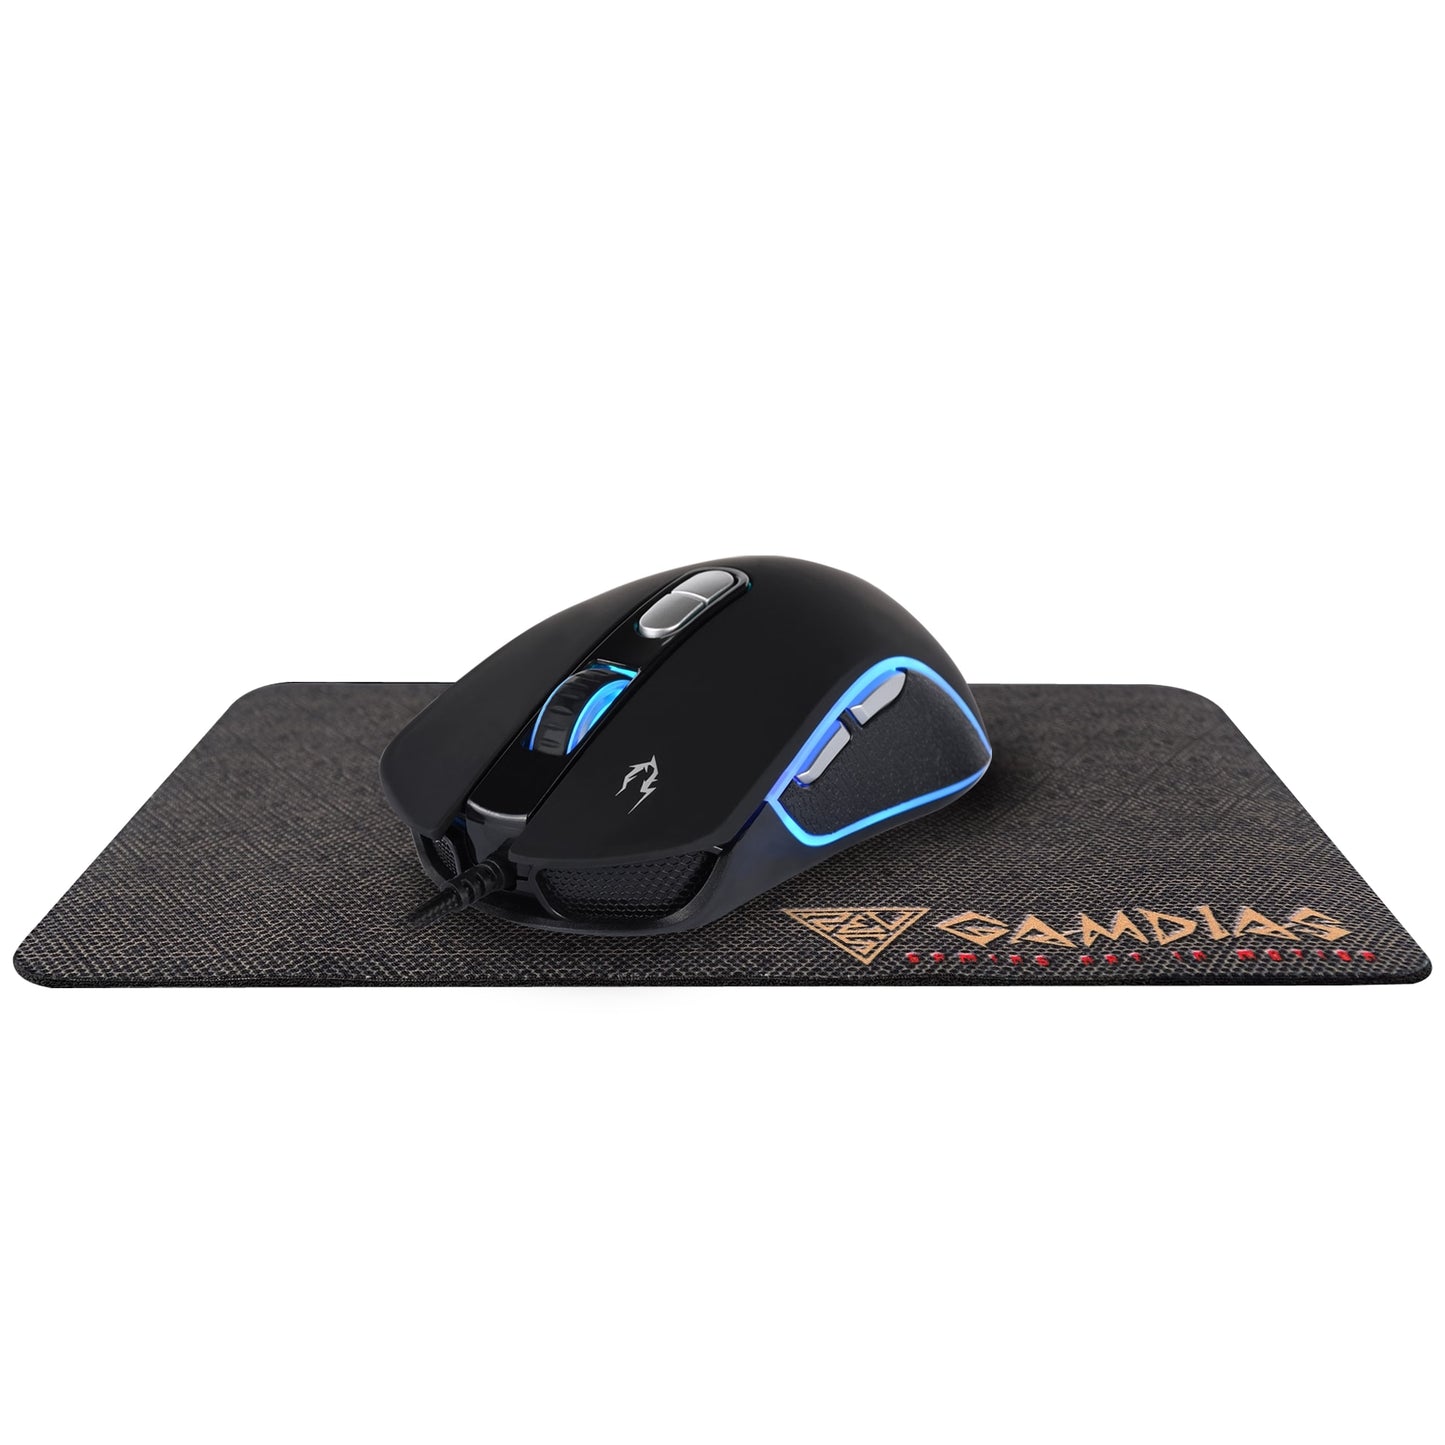 GAMDIAS Zeus M3 RGB Gaming Mouse 7,200 DPI + NYX E1 Mouse Pad 23.5 X 18 CM